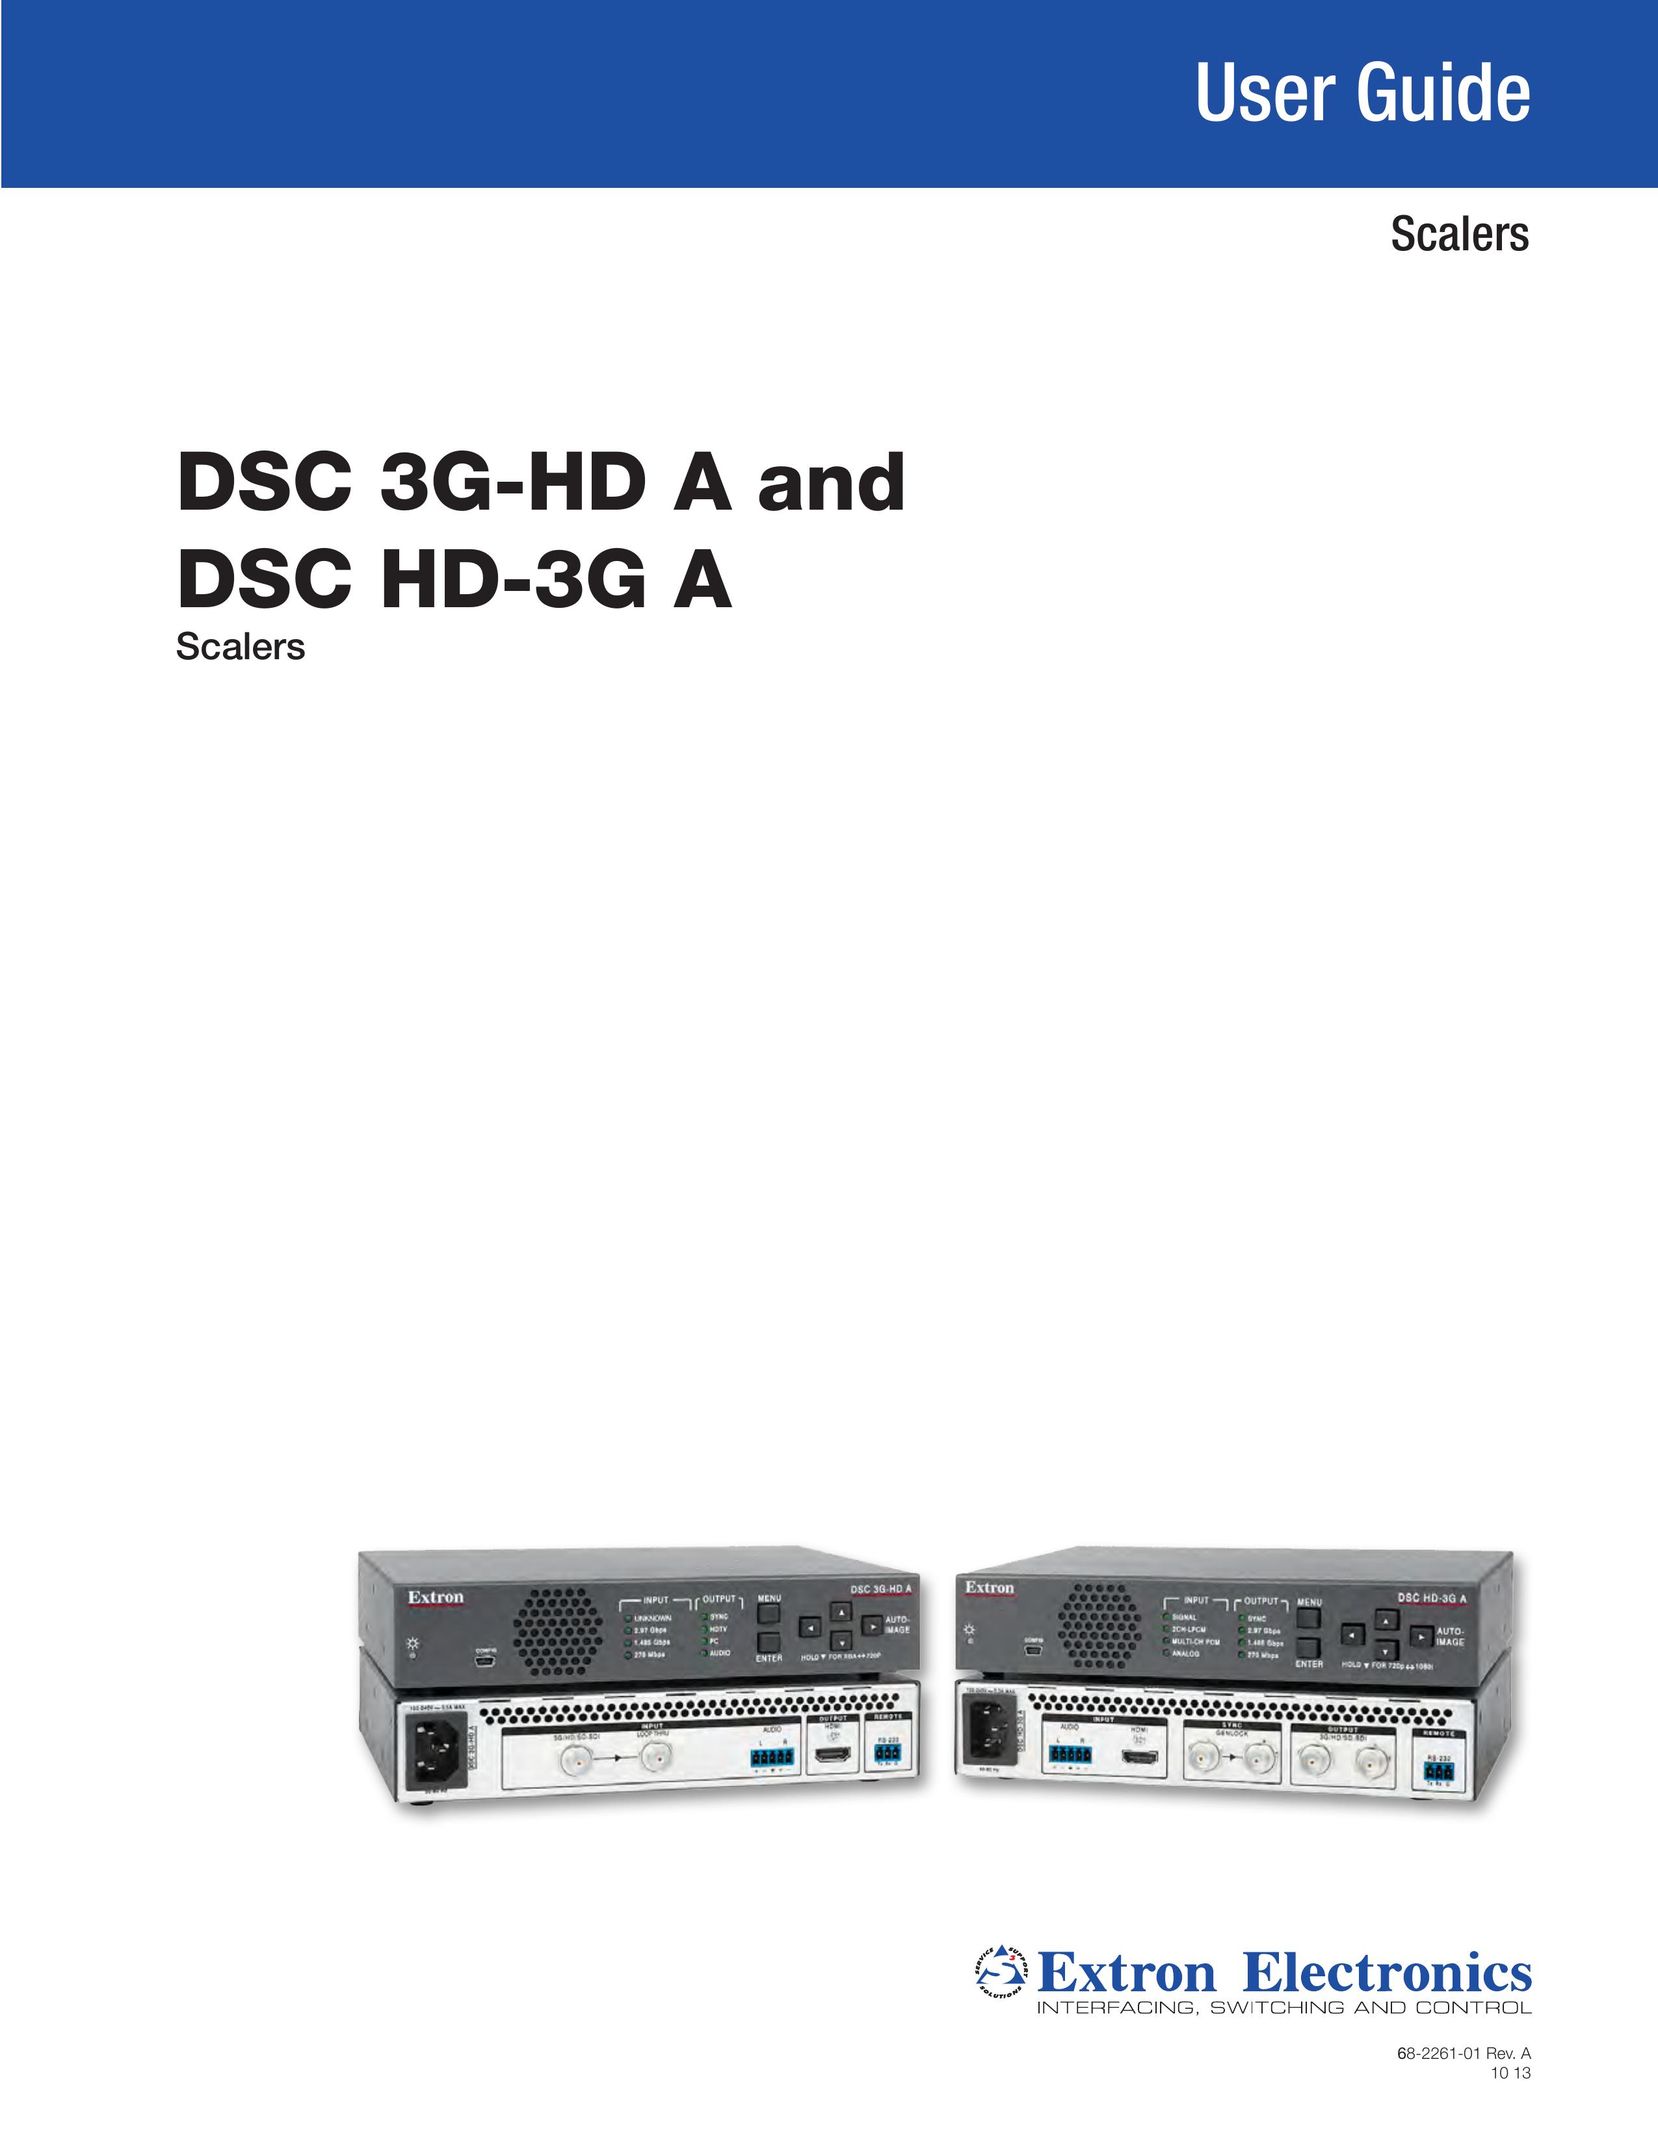 Extron electronic DSC HD-3G A TV Converter Box User Manual